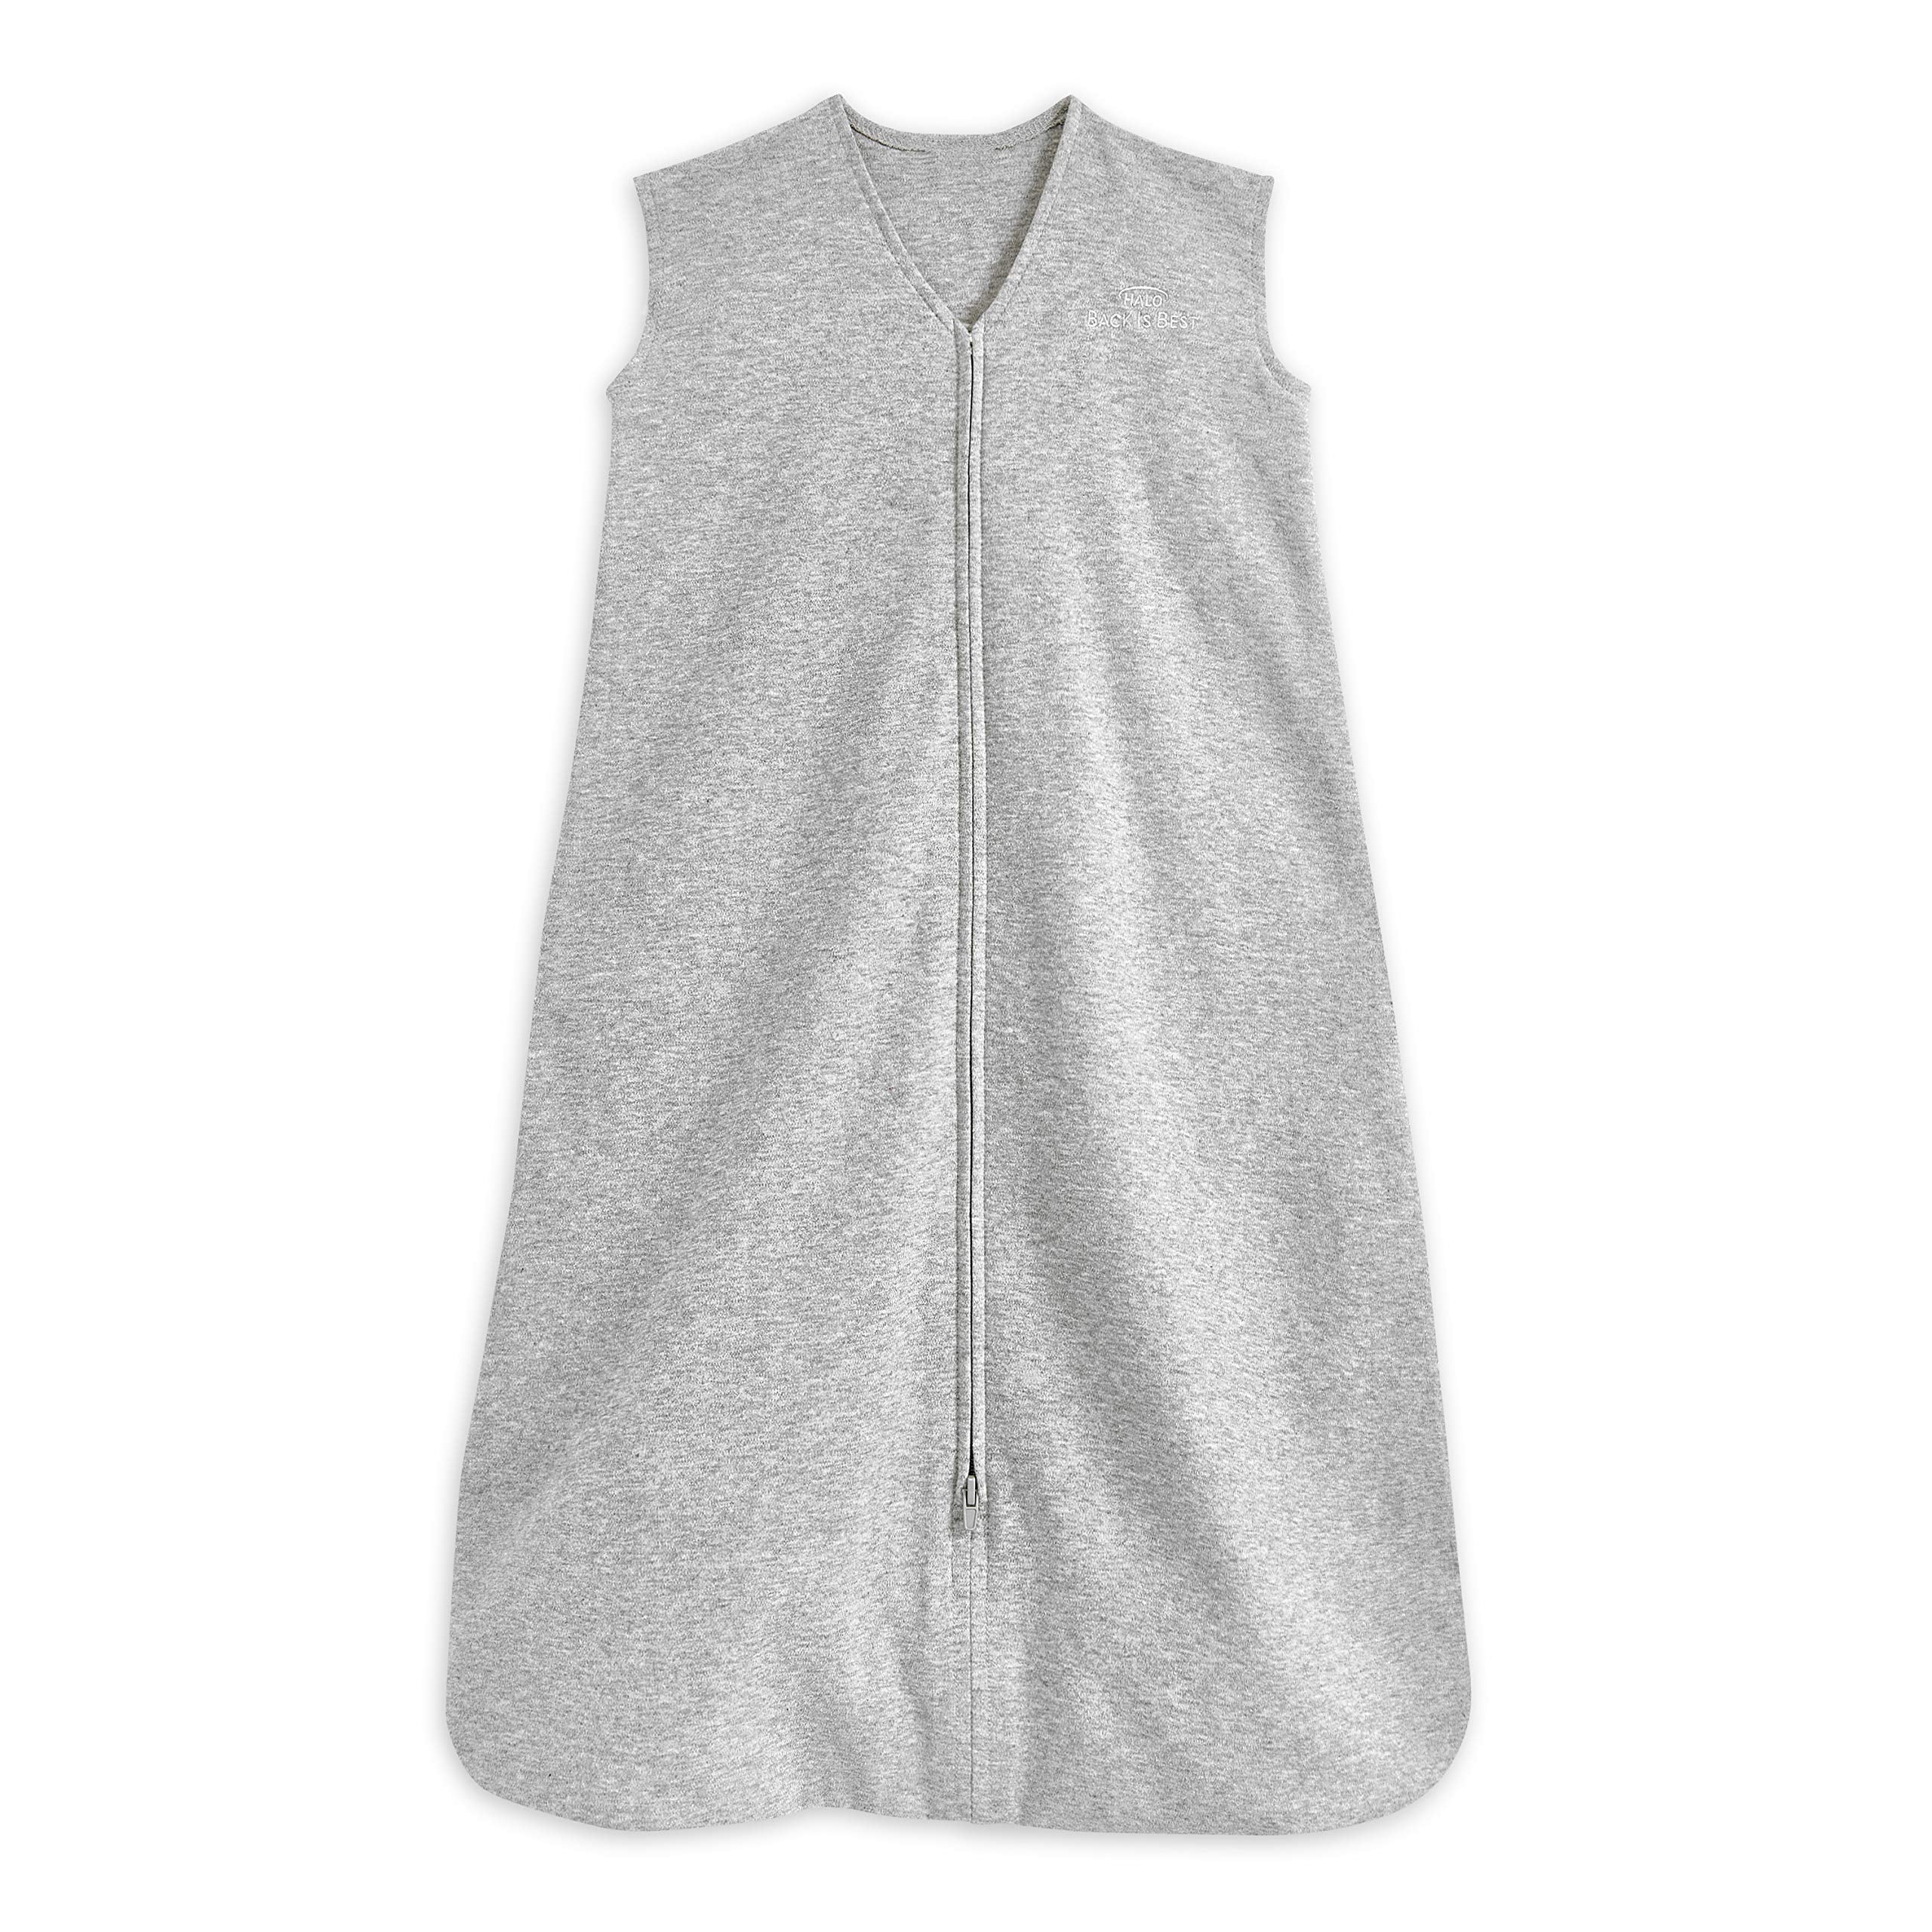 HALO® Sleep SleepSack® Sleeping Bag, 0.5 TOG 100% Cotton Heather Grey Sleeping Bag, Newborn Baby Sleeping Bag, Unisex for Boys and Girls, 6-18 months